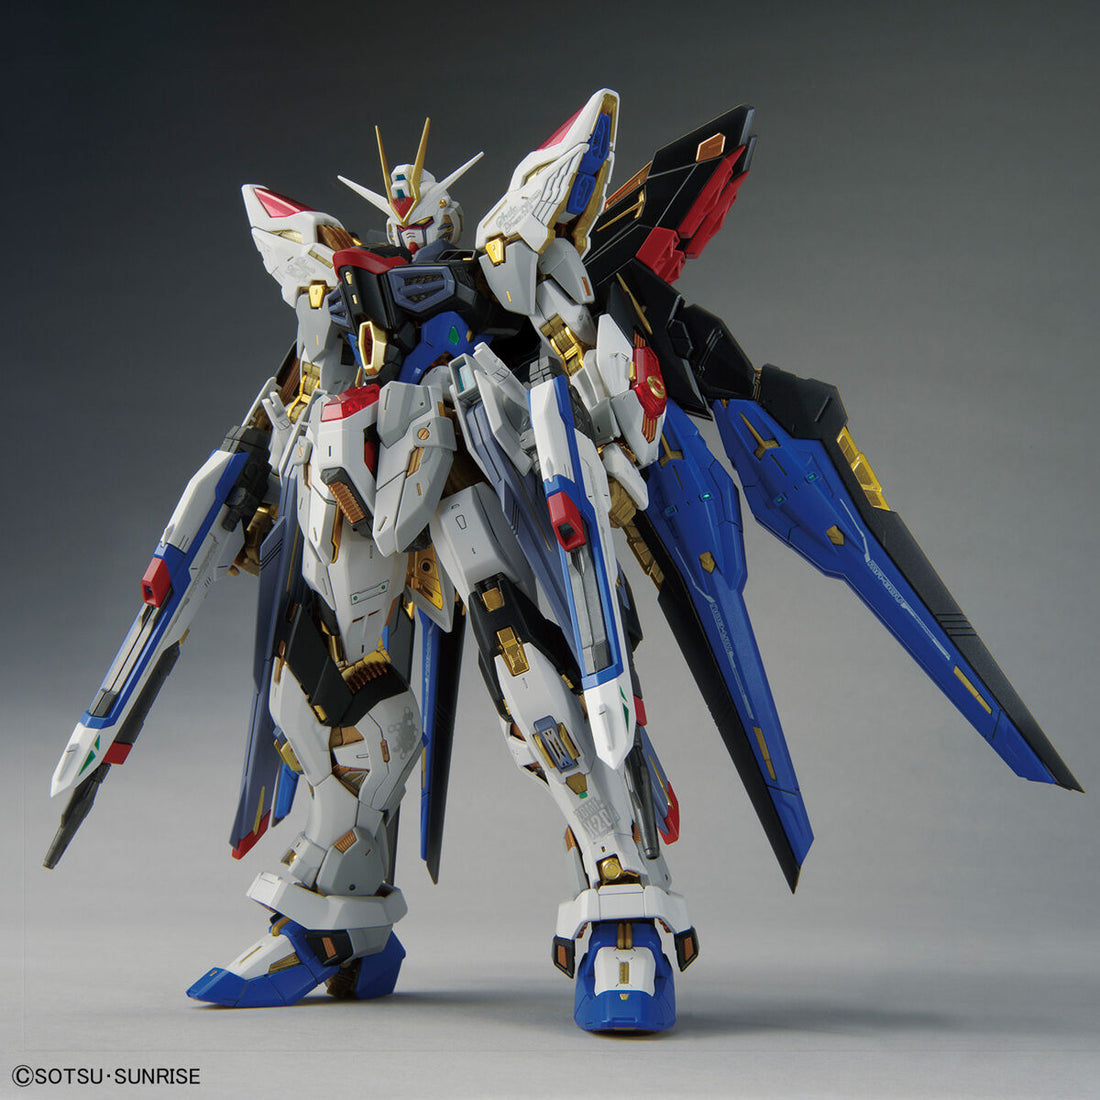 Mobile Suit Gundam Seed Destiny Strike Freedom Gundam Perfect Grade 1:60  Scale Model Kit